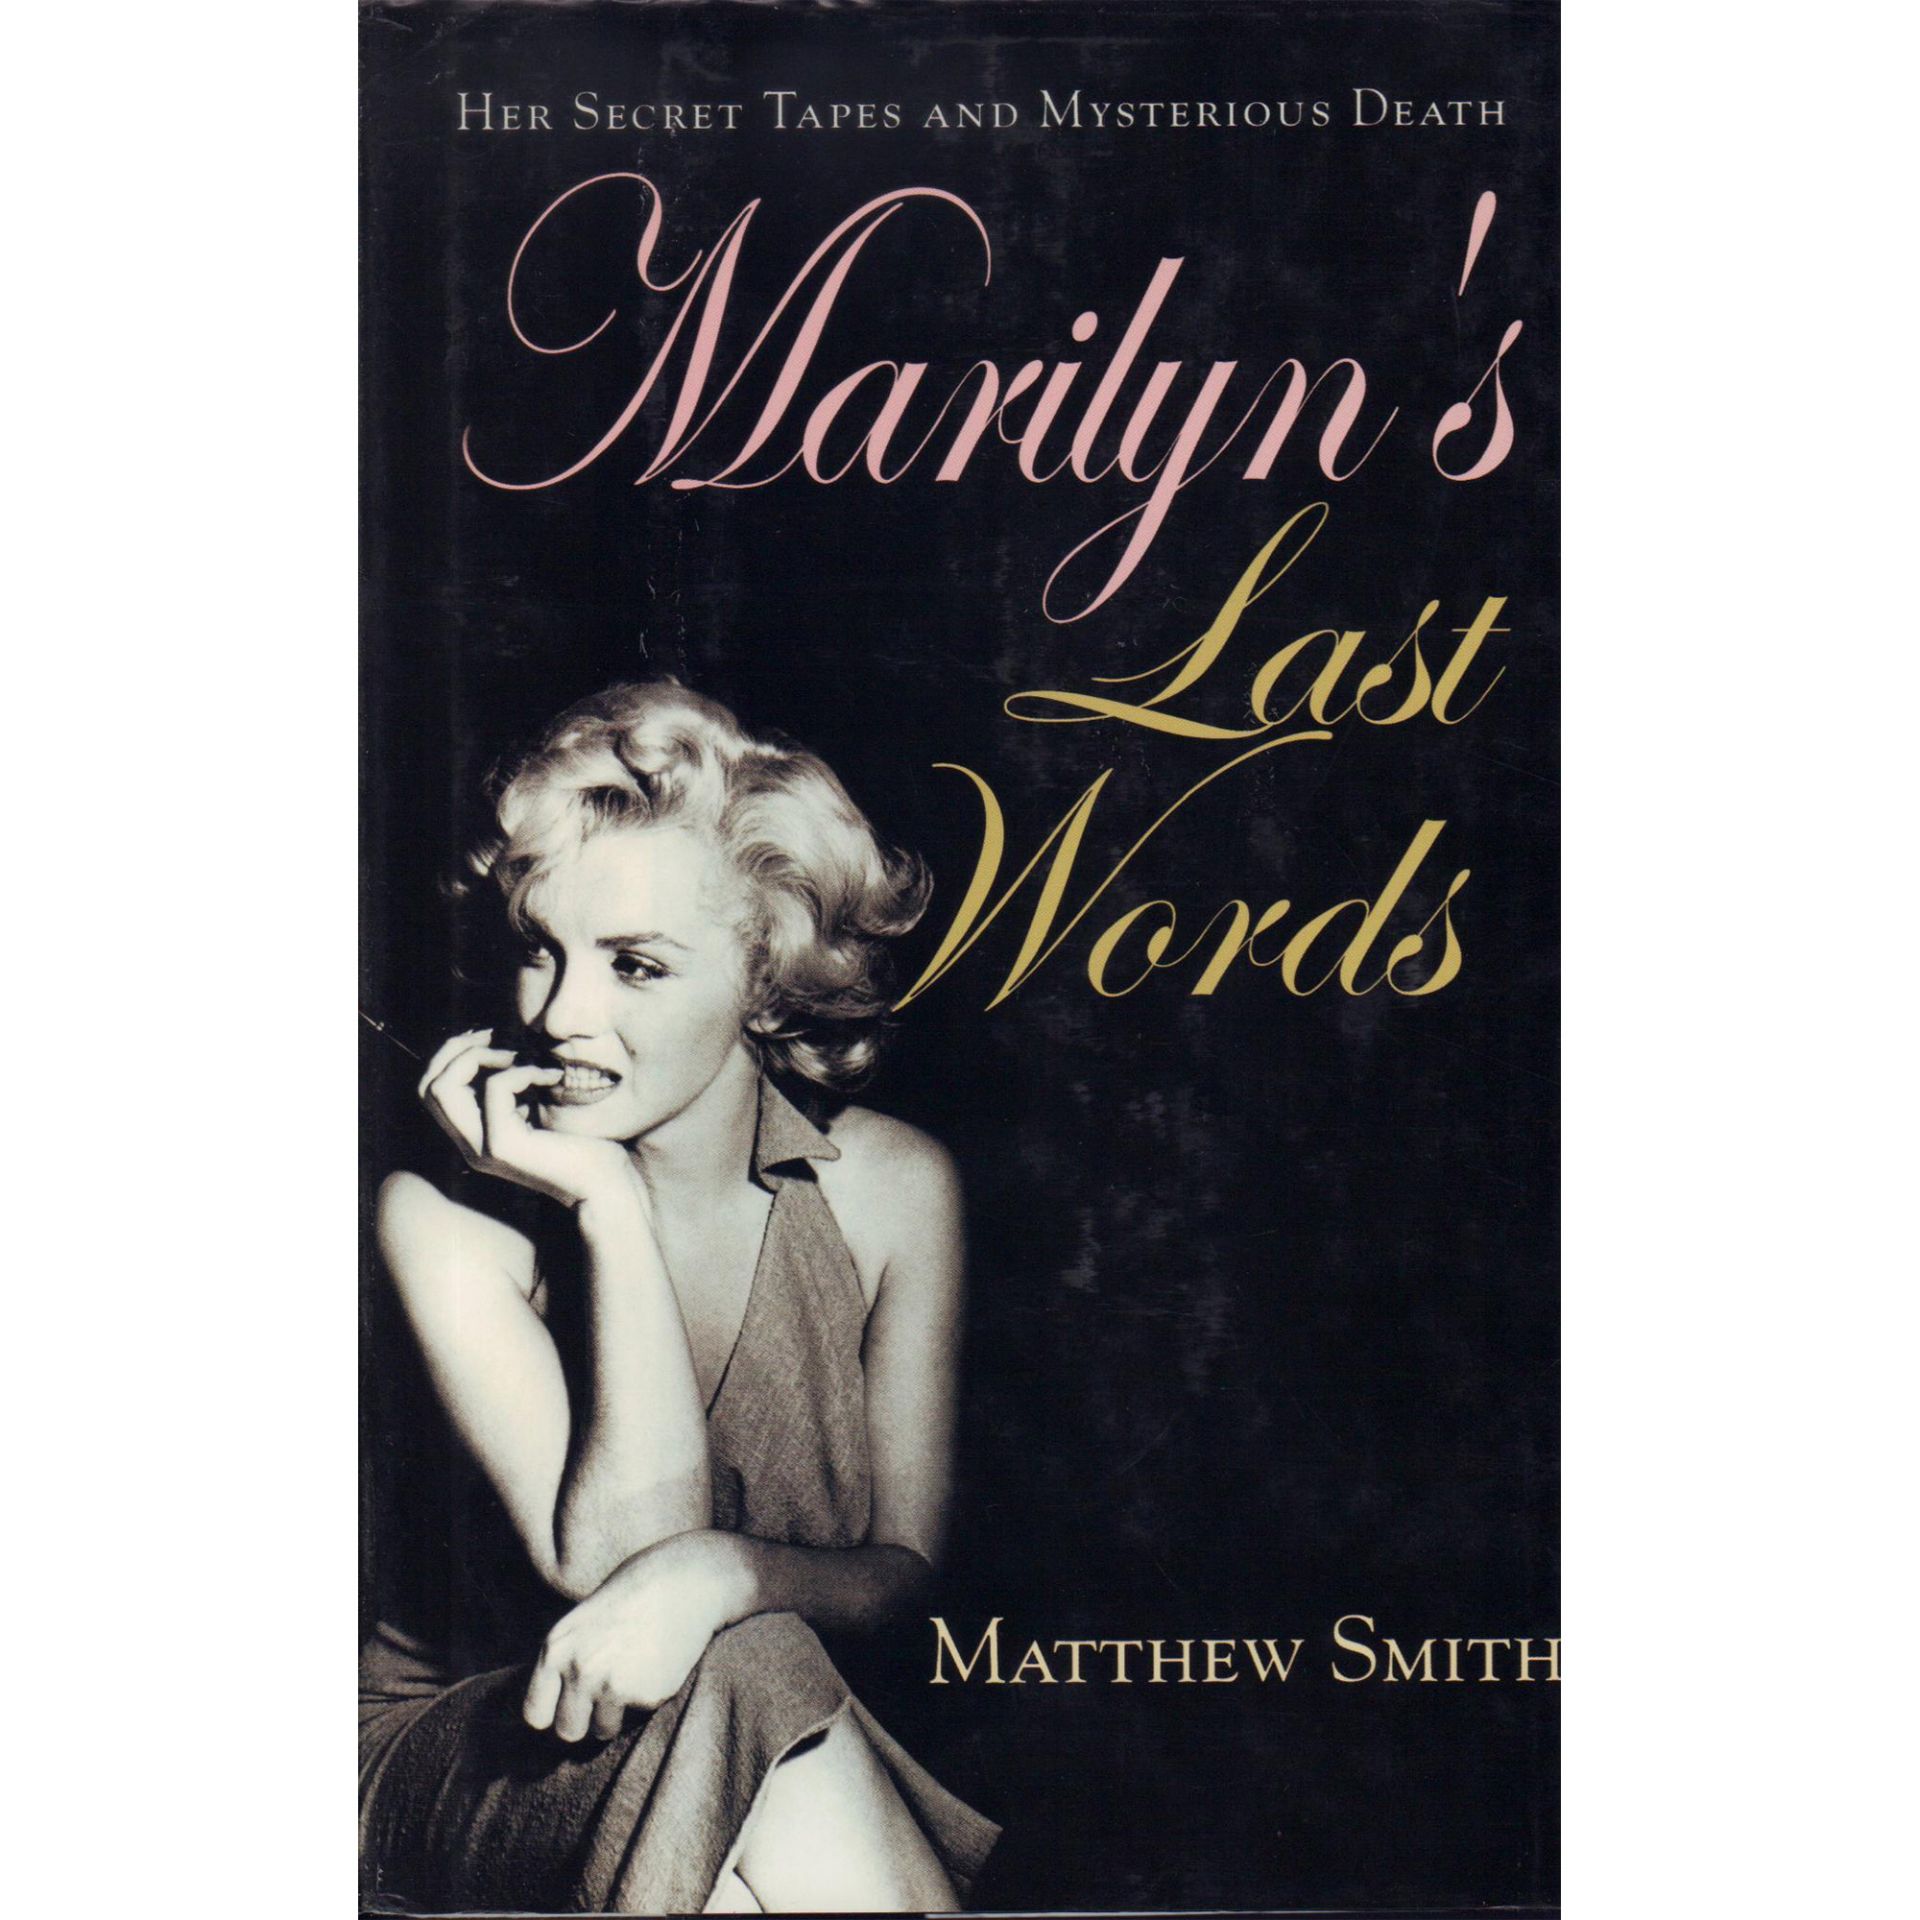 Hardcover Book, Marilyn's Last Words